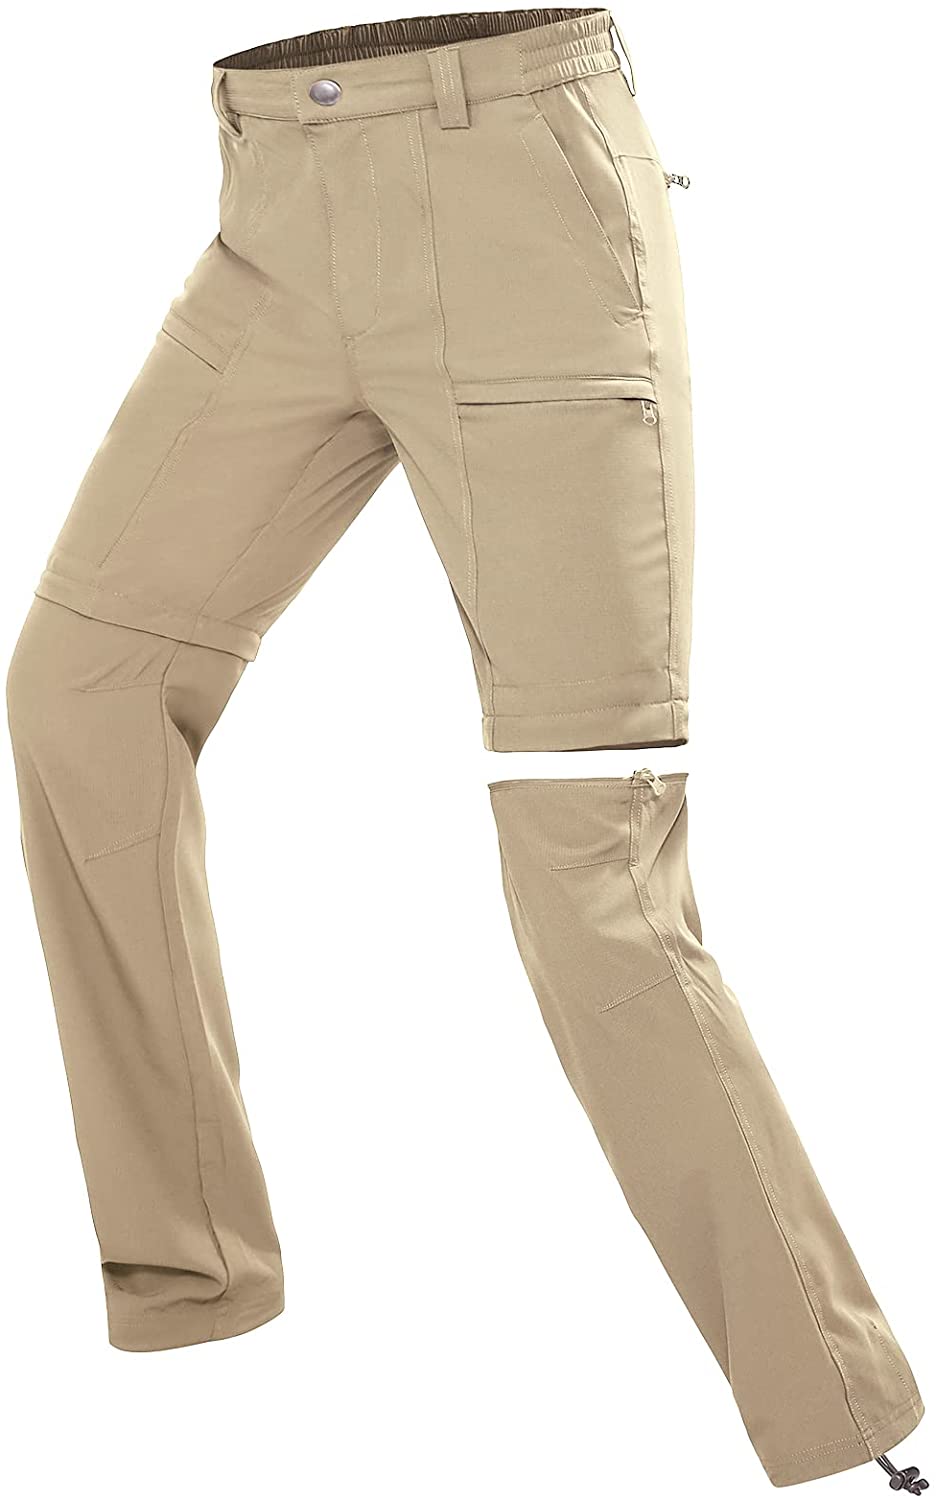 Wespornow Hiking-Pants-Women Convertible Zip-Off Pants Lightweight Quick-Dry Cargo Pants for Golf Kayaking Grey / Medium